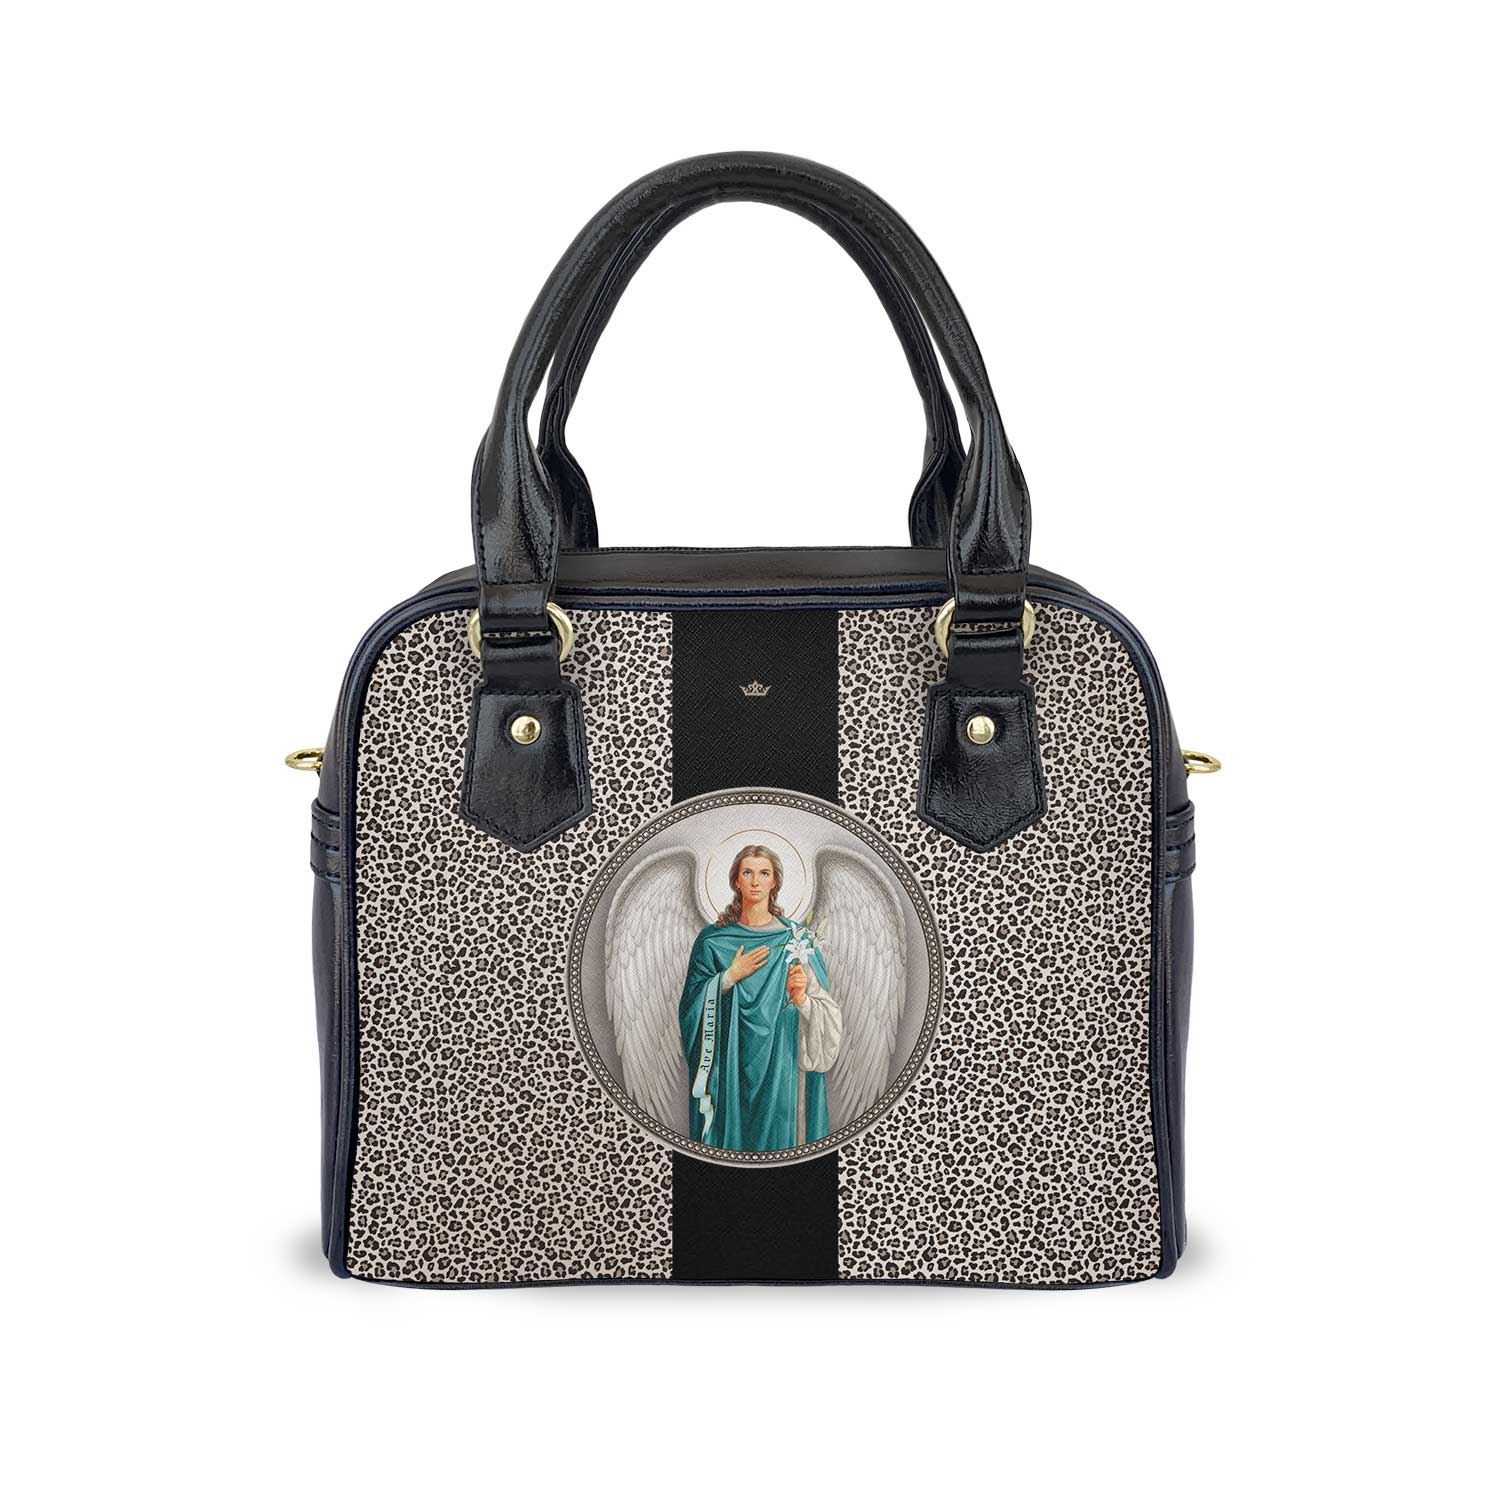 St. Gabriel the Archangel Medallion Handbag (Leopard) - VENXARA®